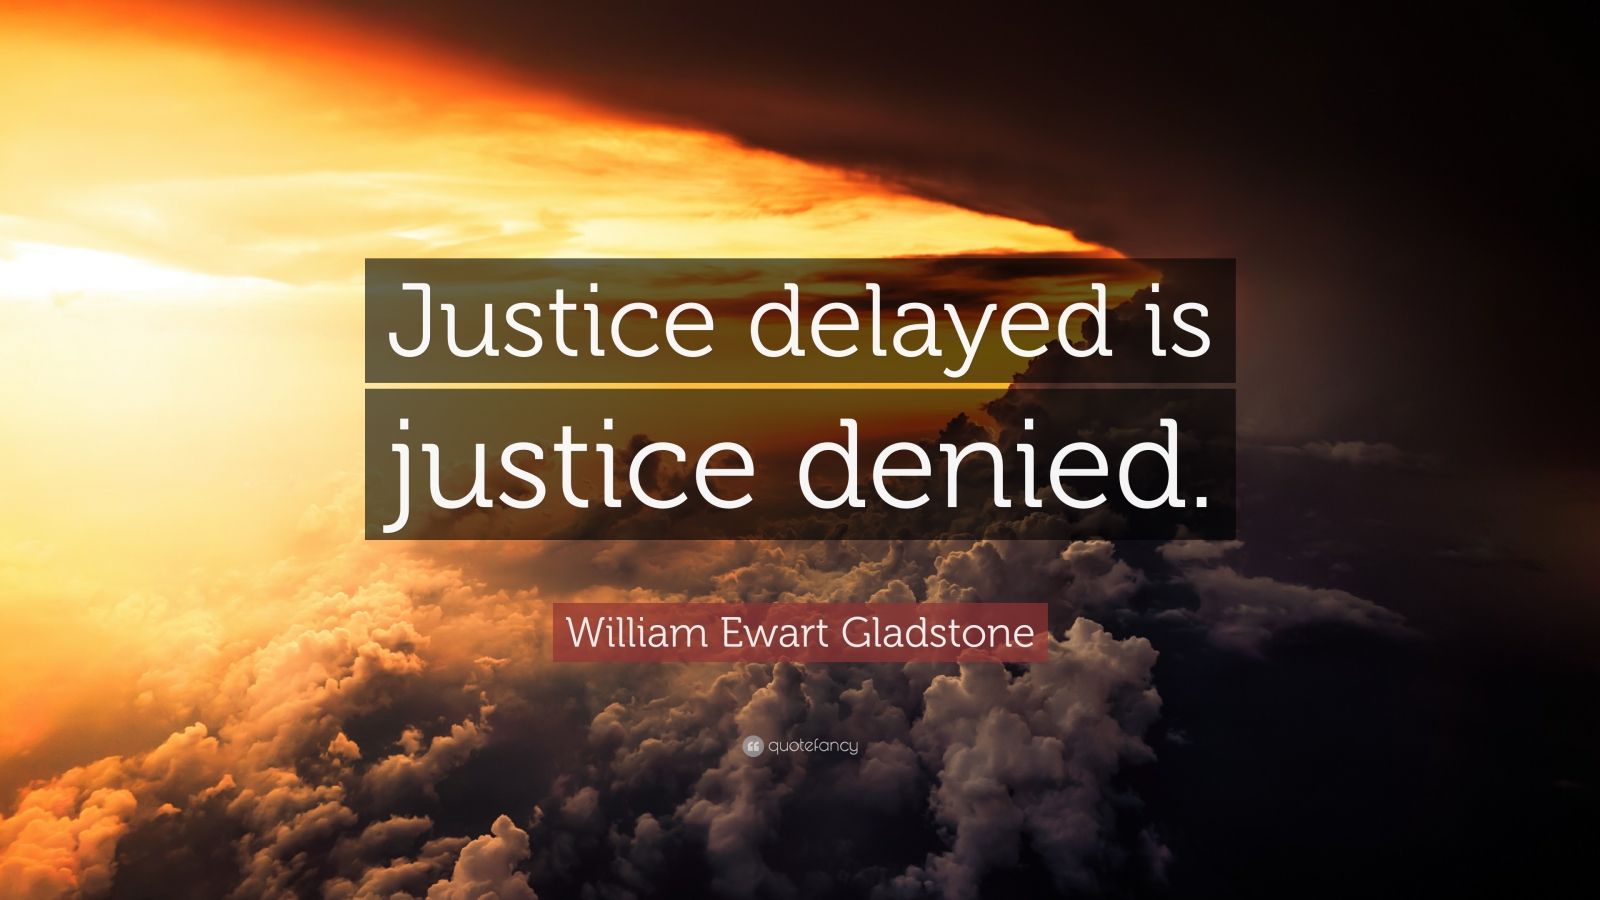 William Ewart Gladstone Quote: "Justice delayed is justice ...